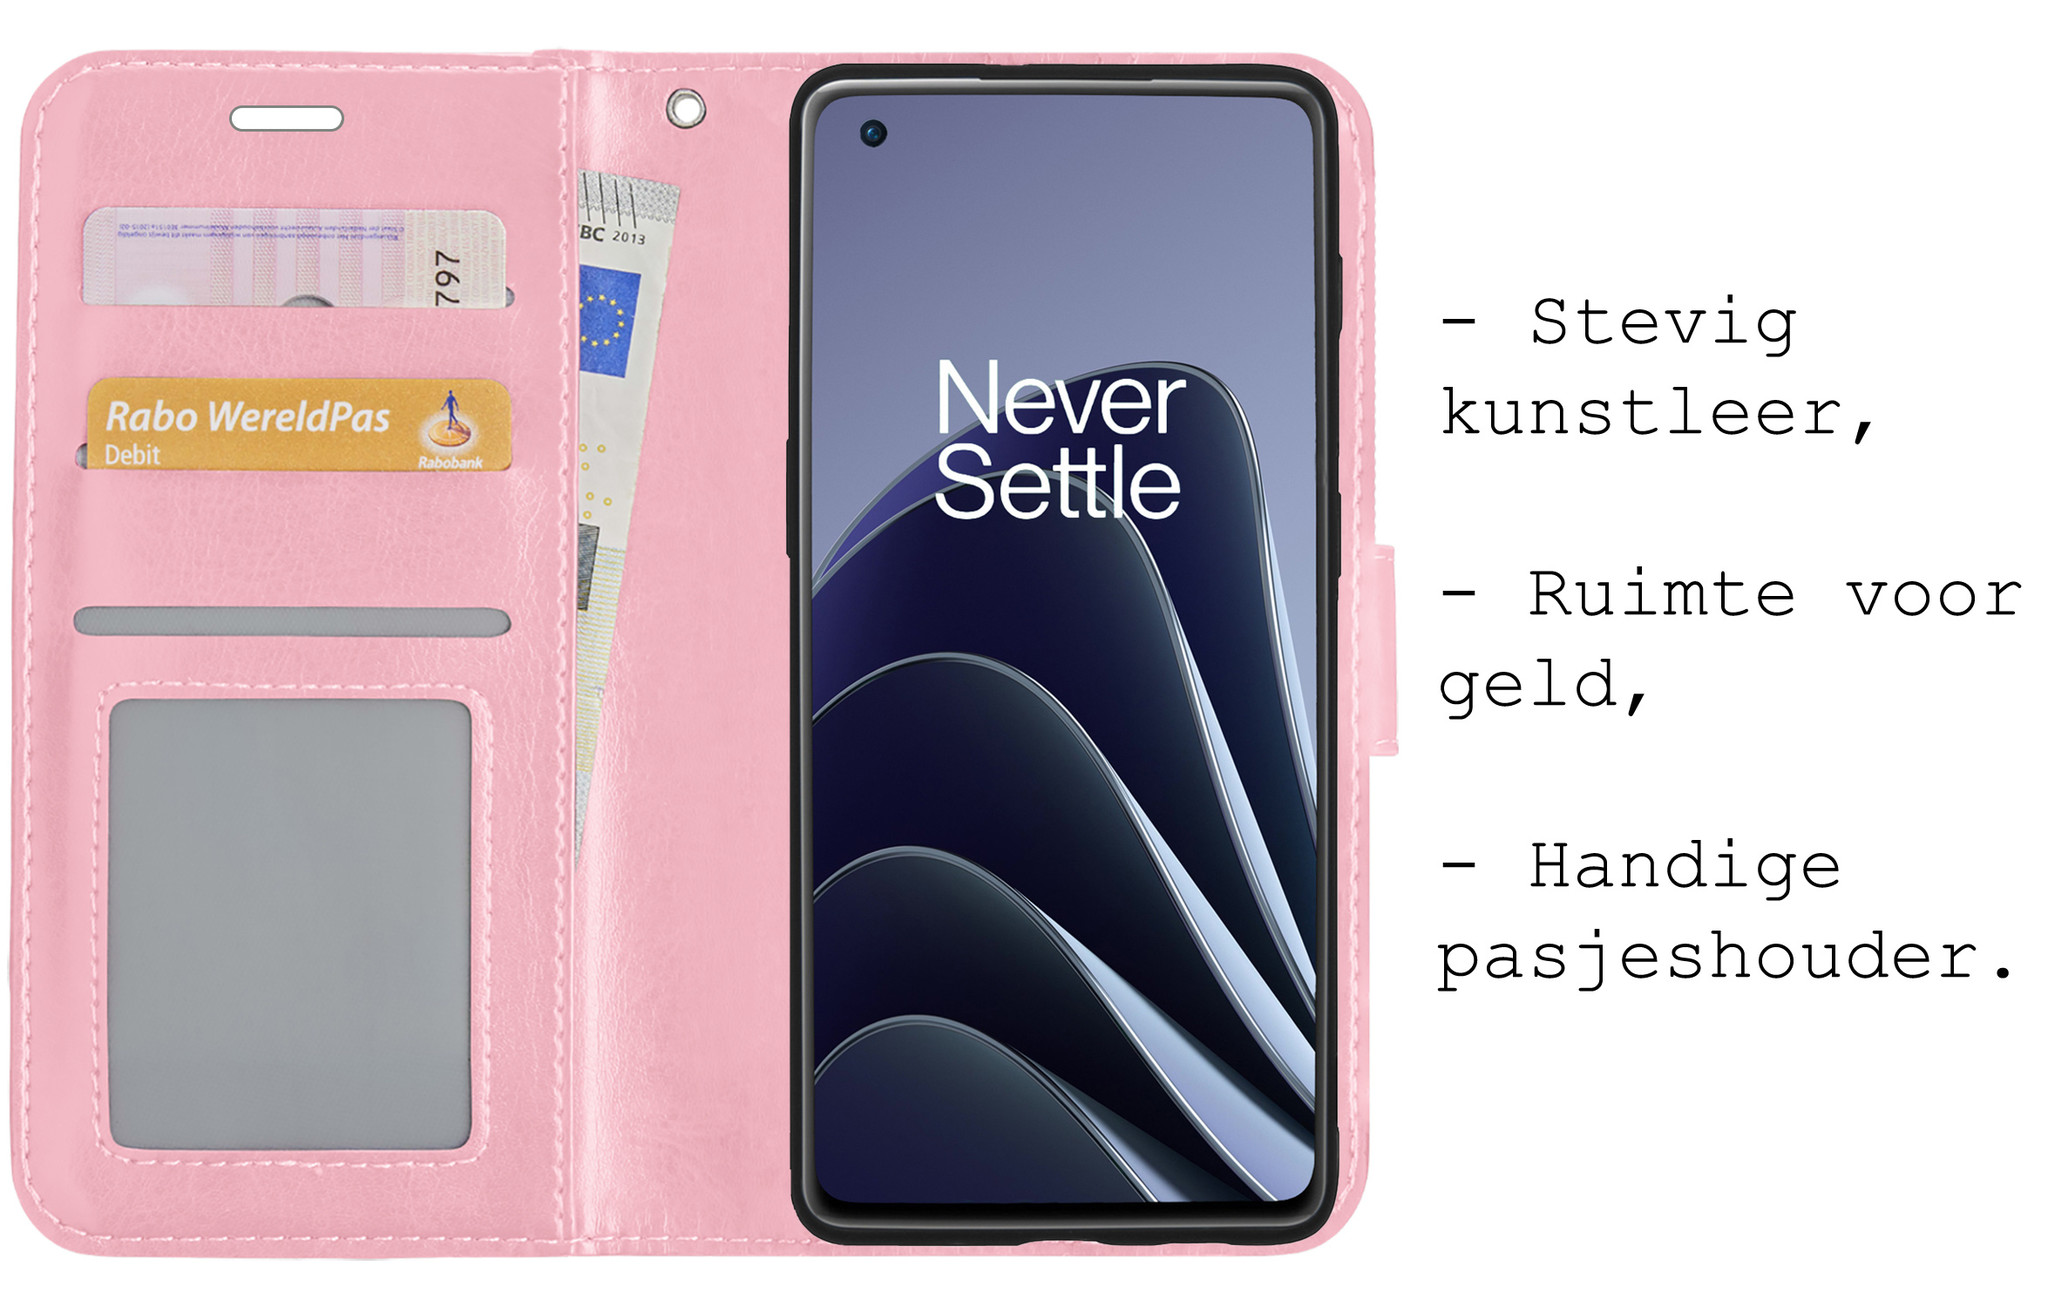 BASEY. OnePlus 10 Pro Hoesje Bookcase - OnePlus 10 Pro Hoes Flip Case Book Cover - OnePlus 10 Pro Hoes Book Case Licht Roze